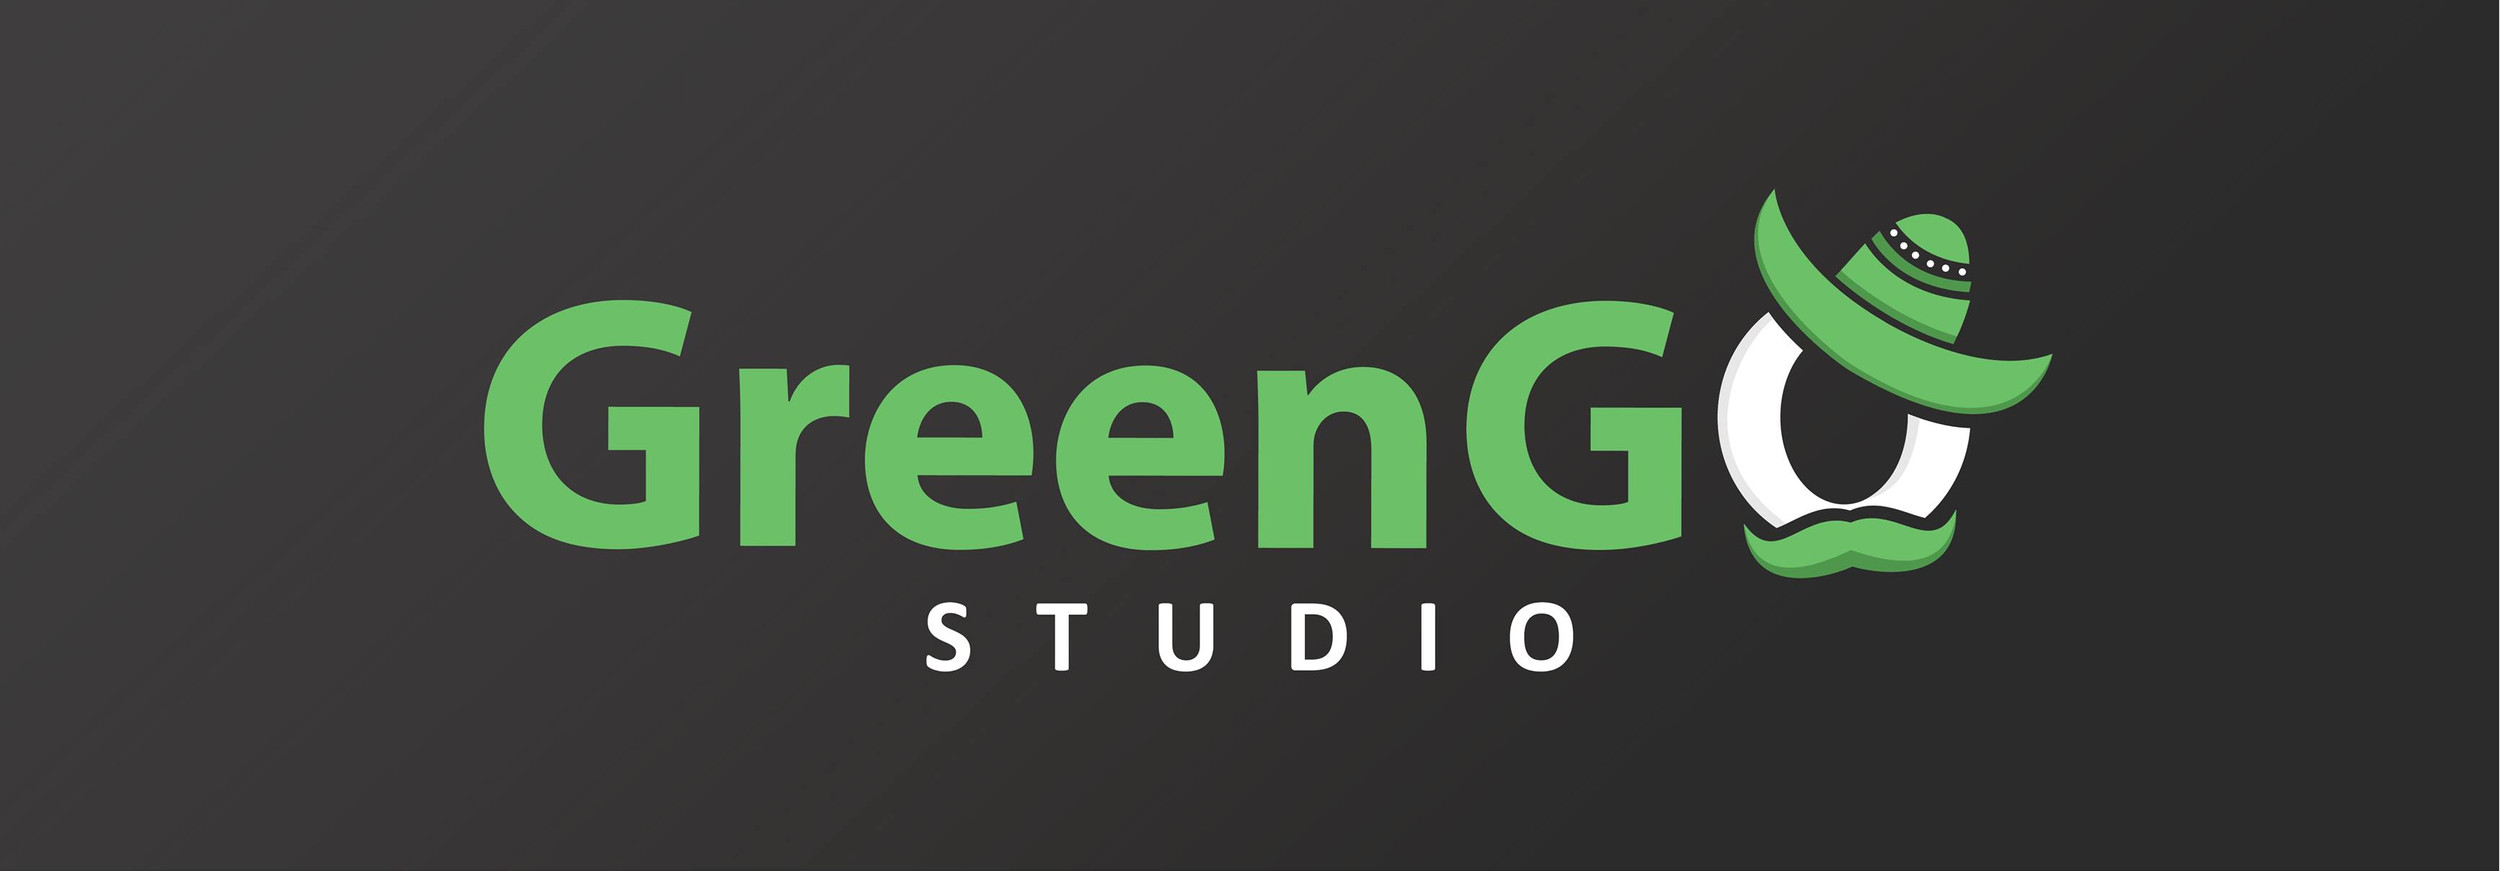 www.greengo-studio.com